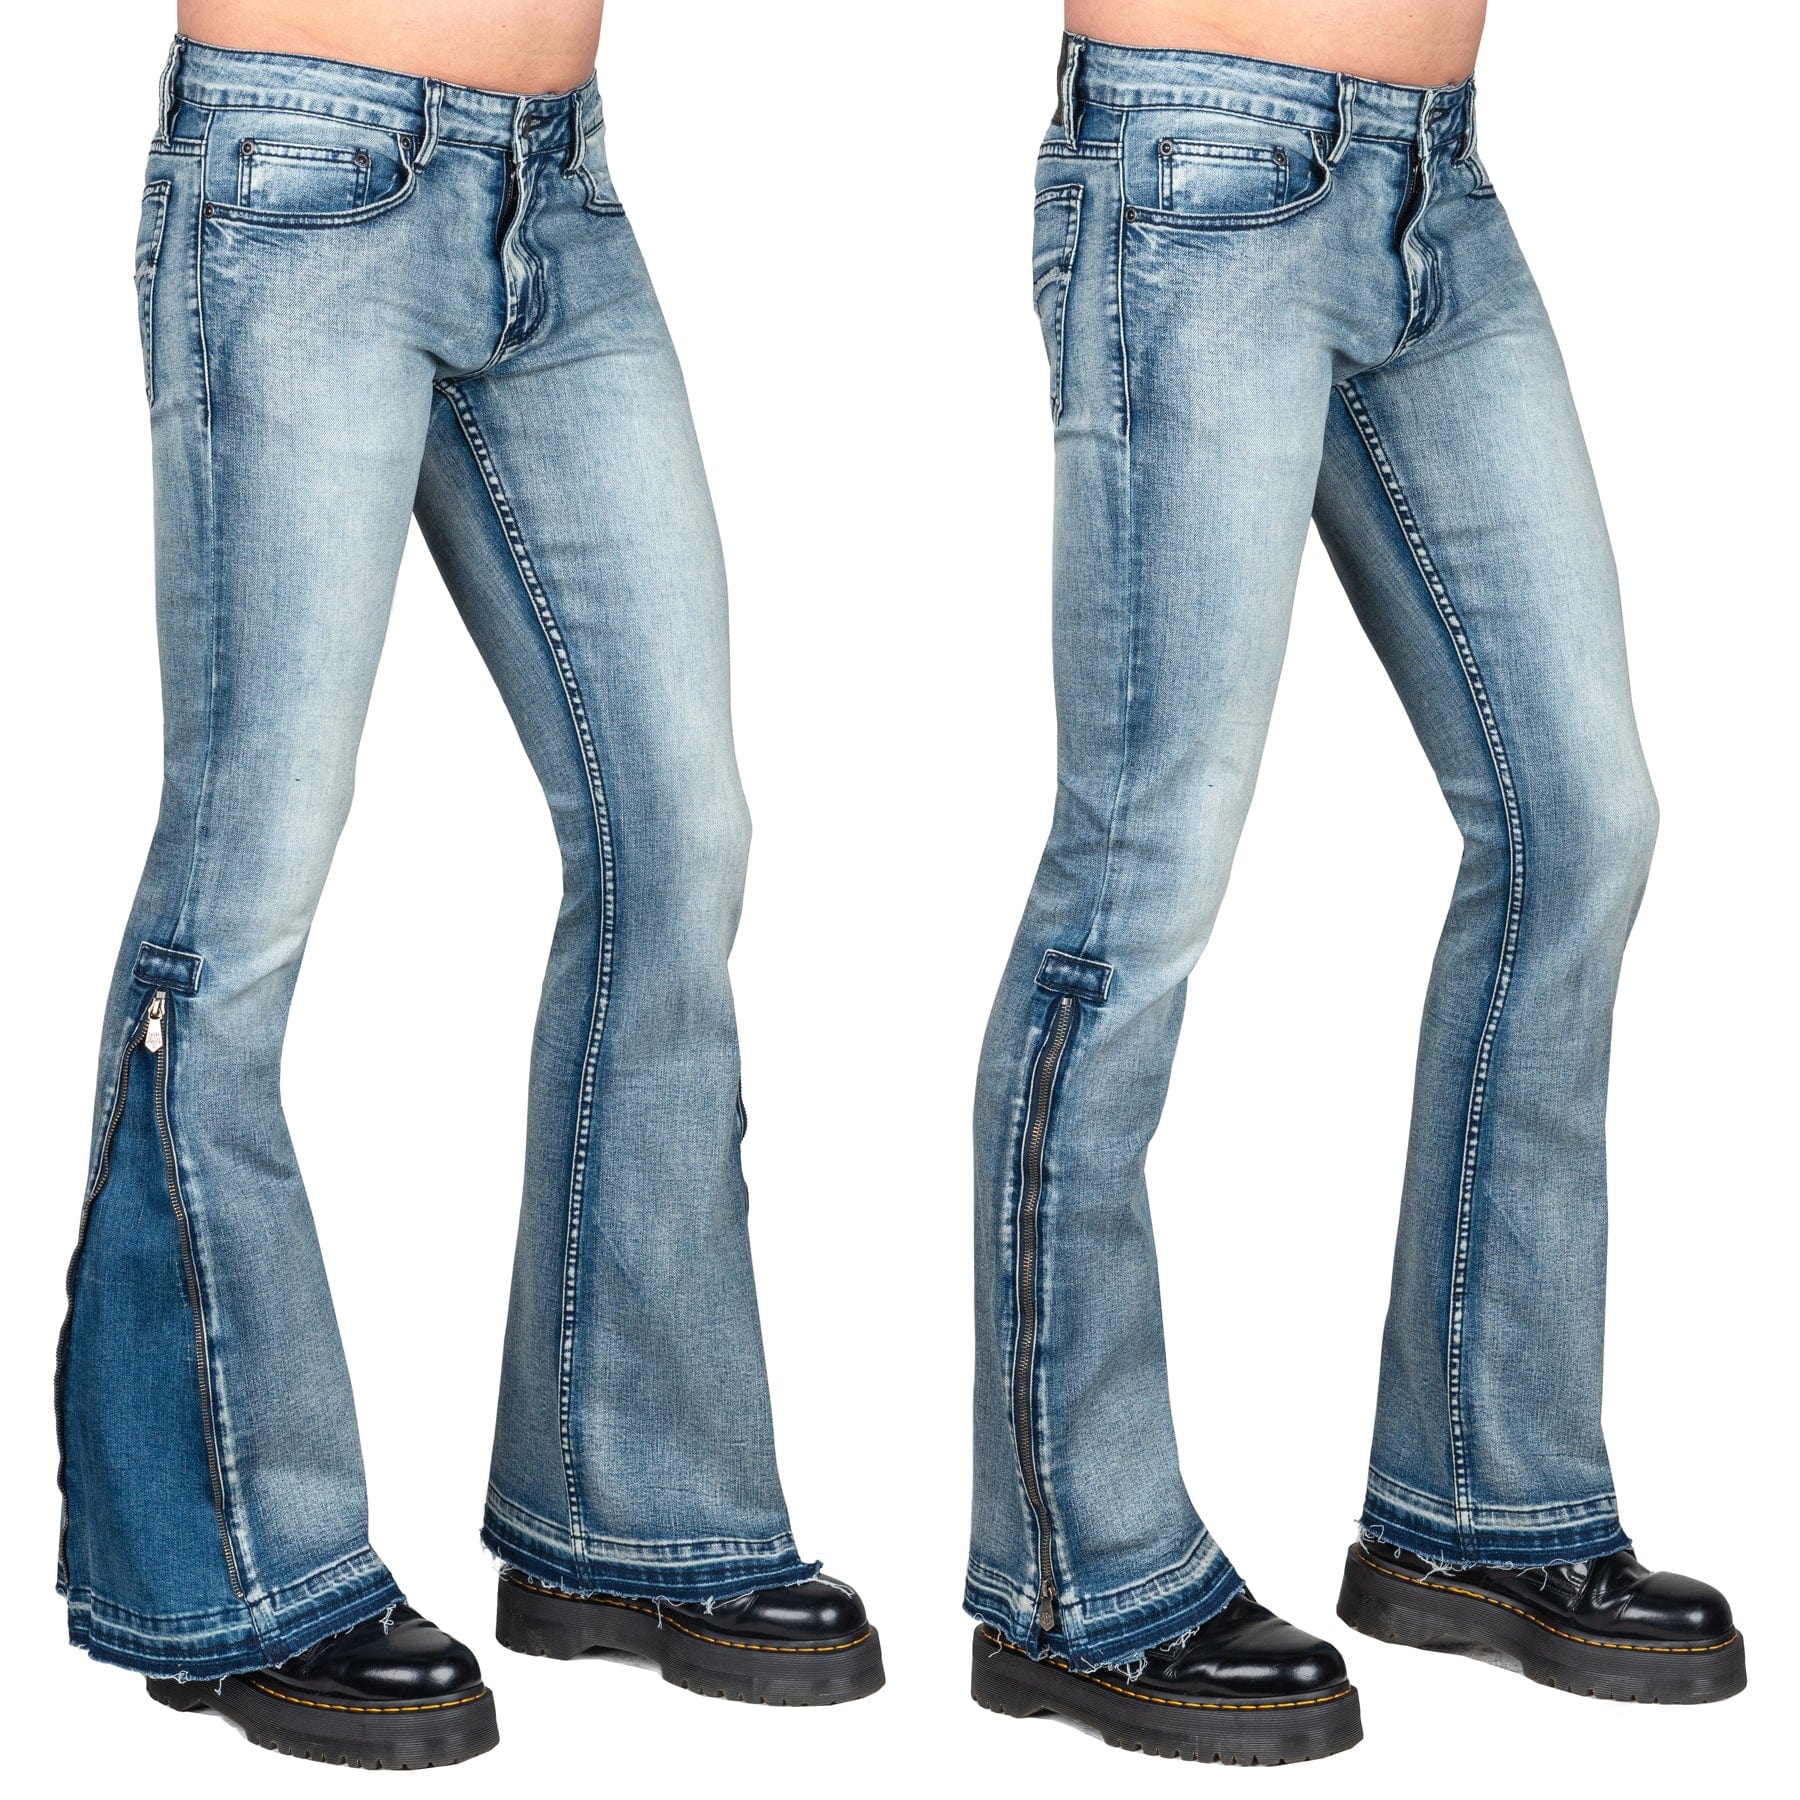 Wornstar Clothing Hellraiser Side Zipper Mens Jeans - Classic Blue